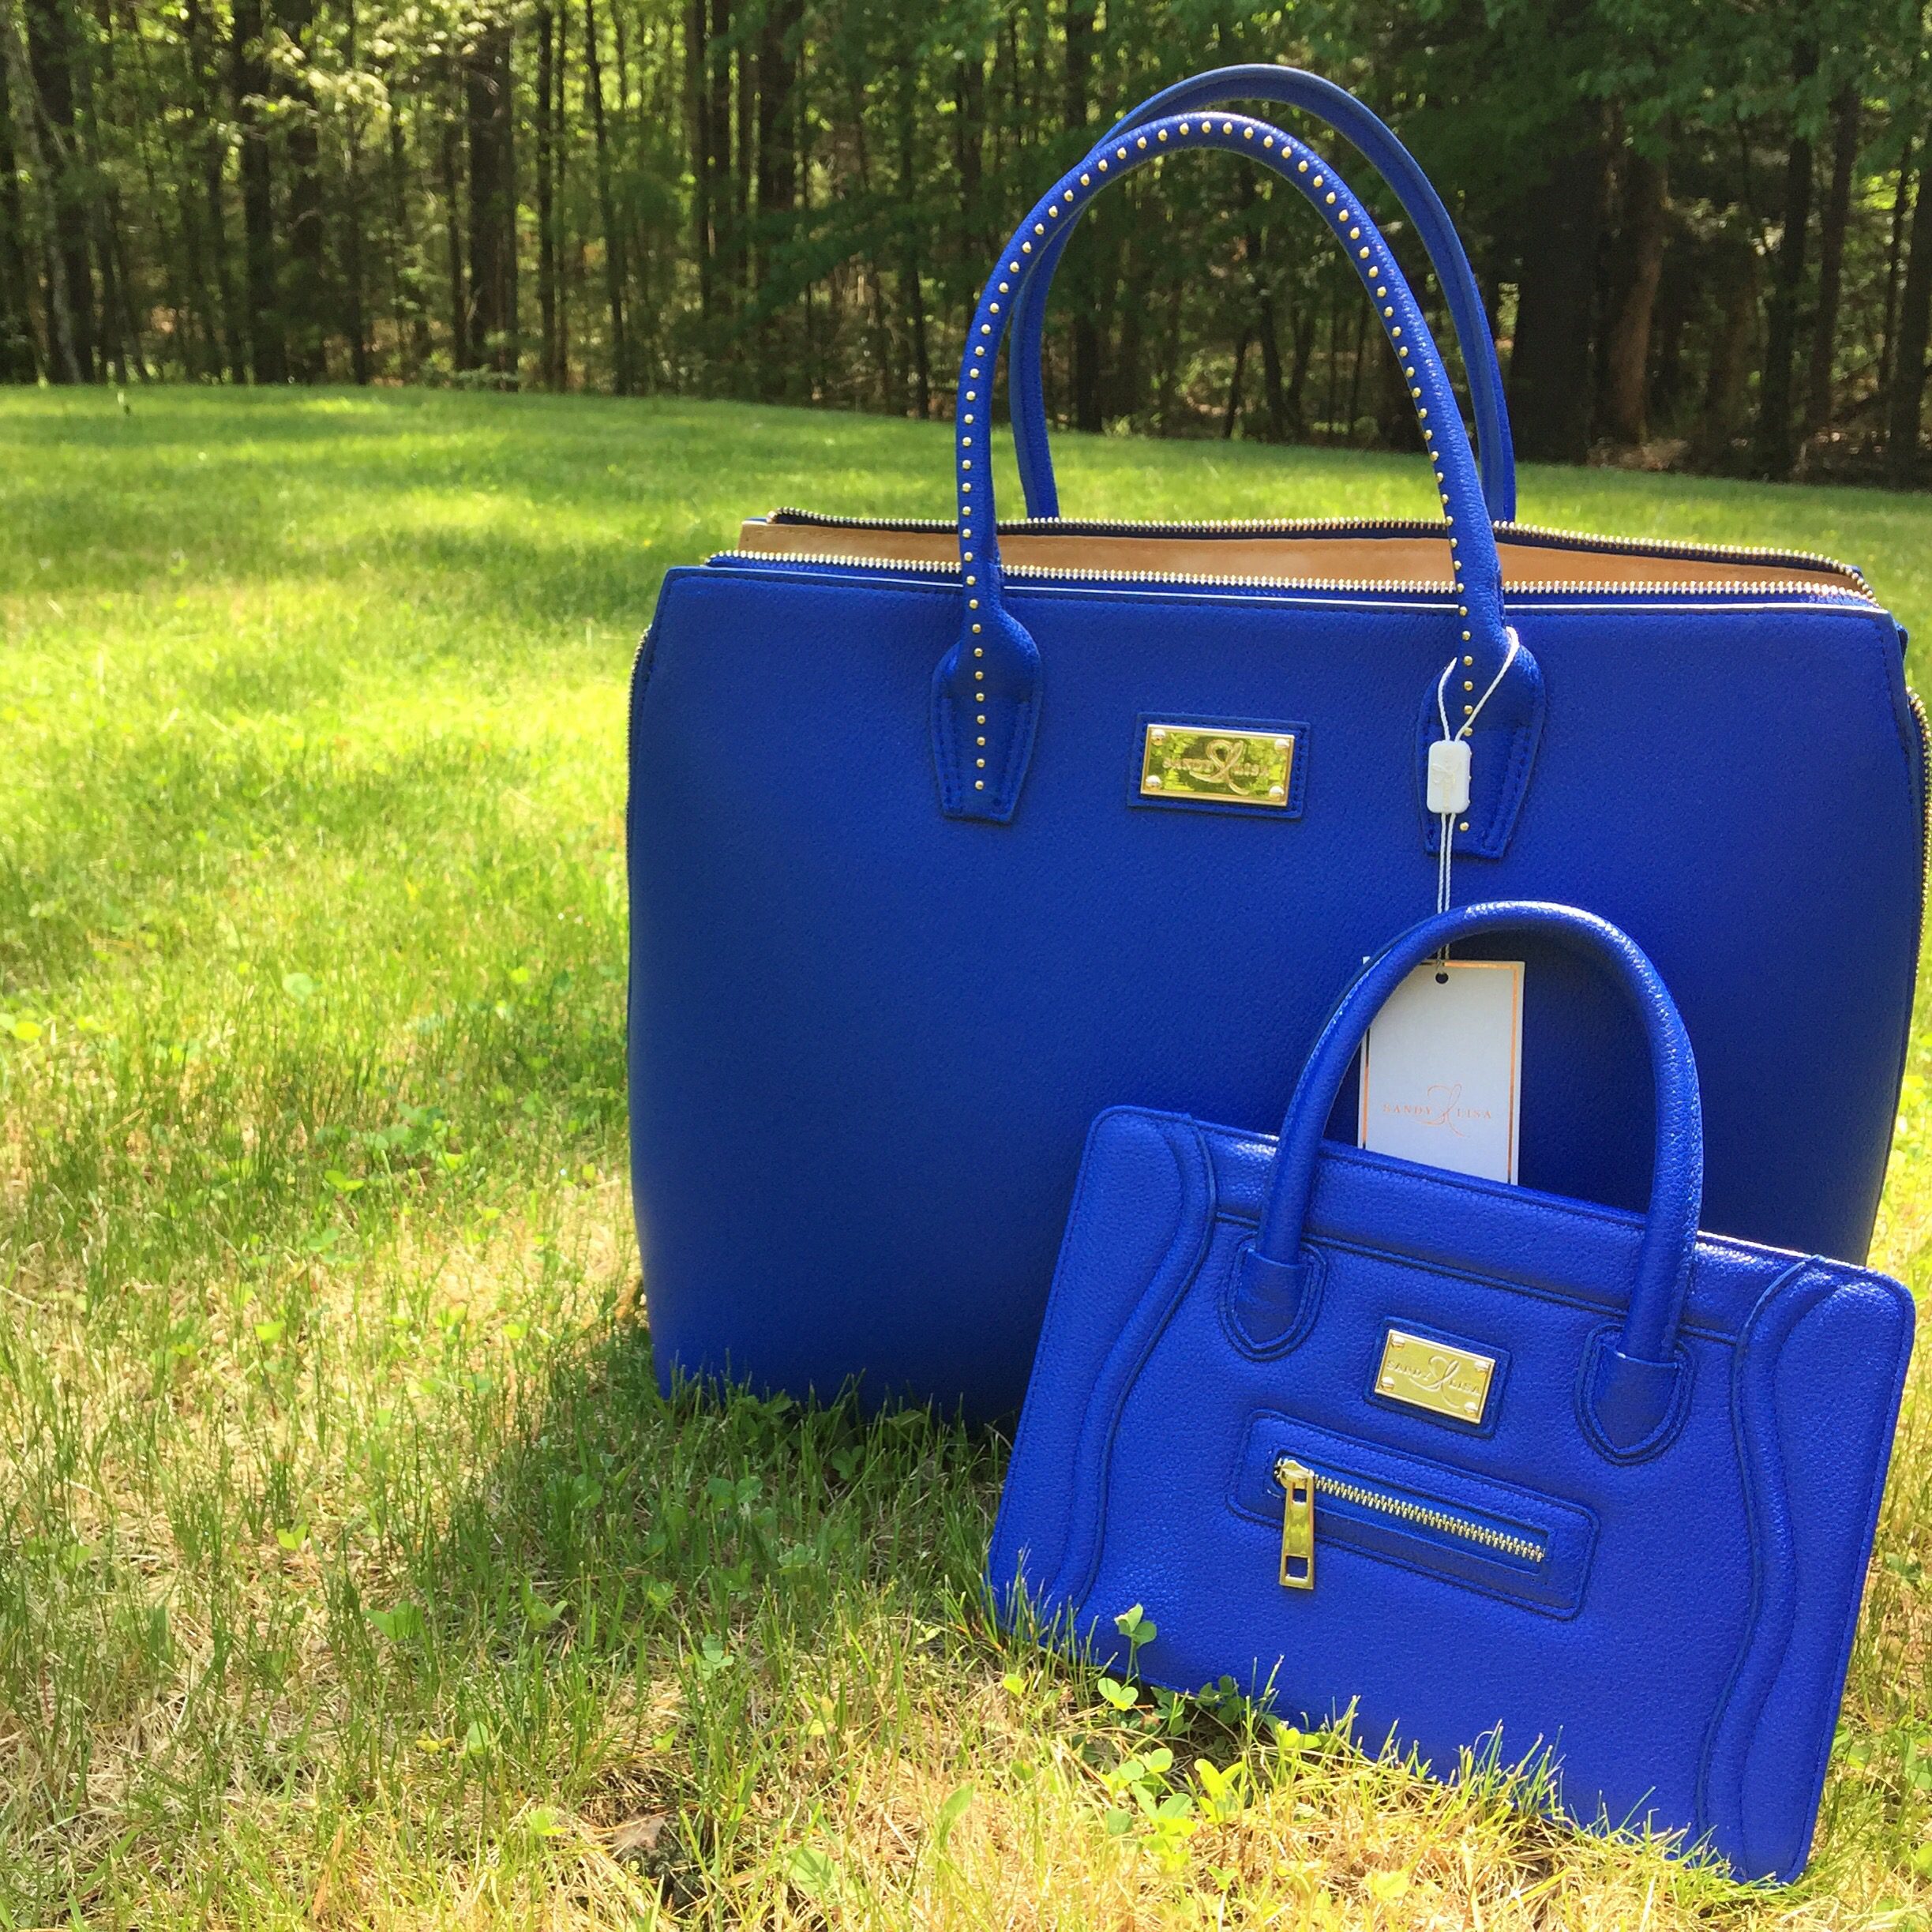 Sandy Lisa Fashionable & Functional Handbags • The Fashionable Housewife